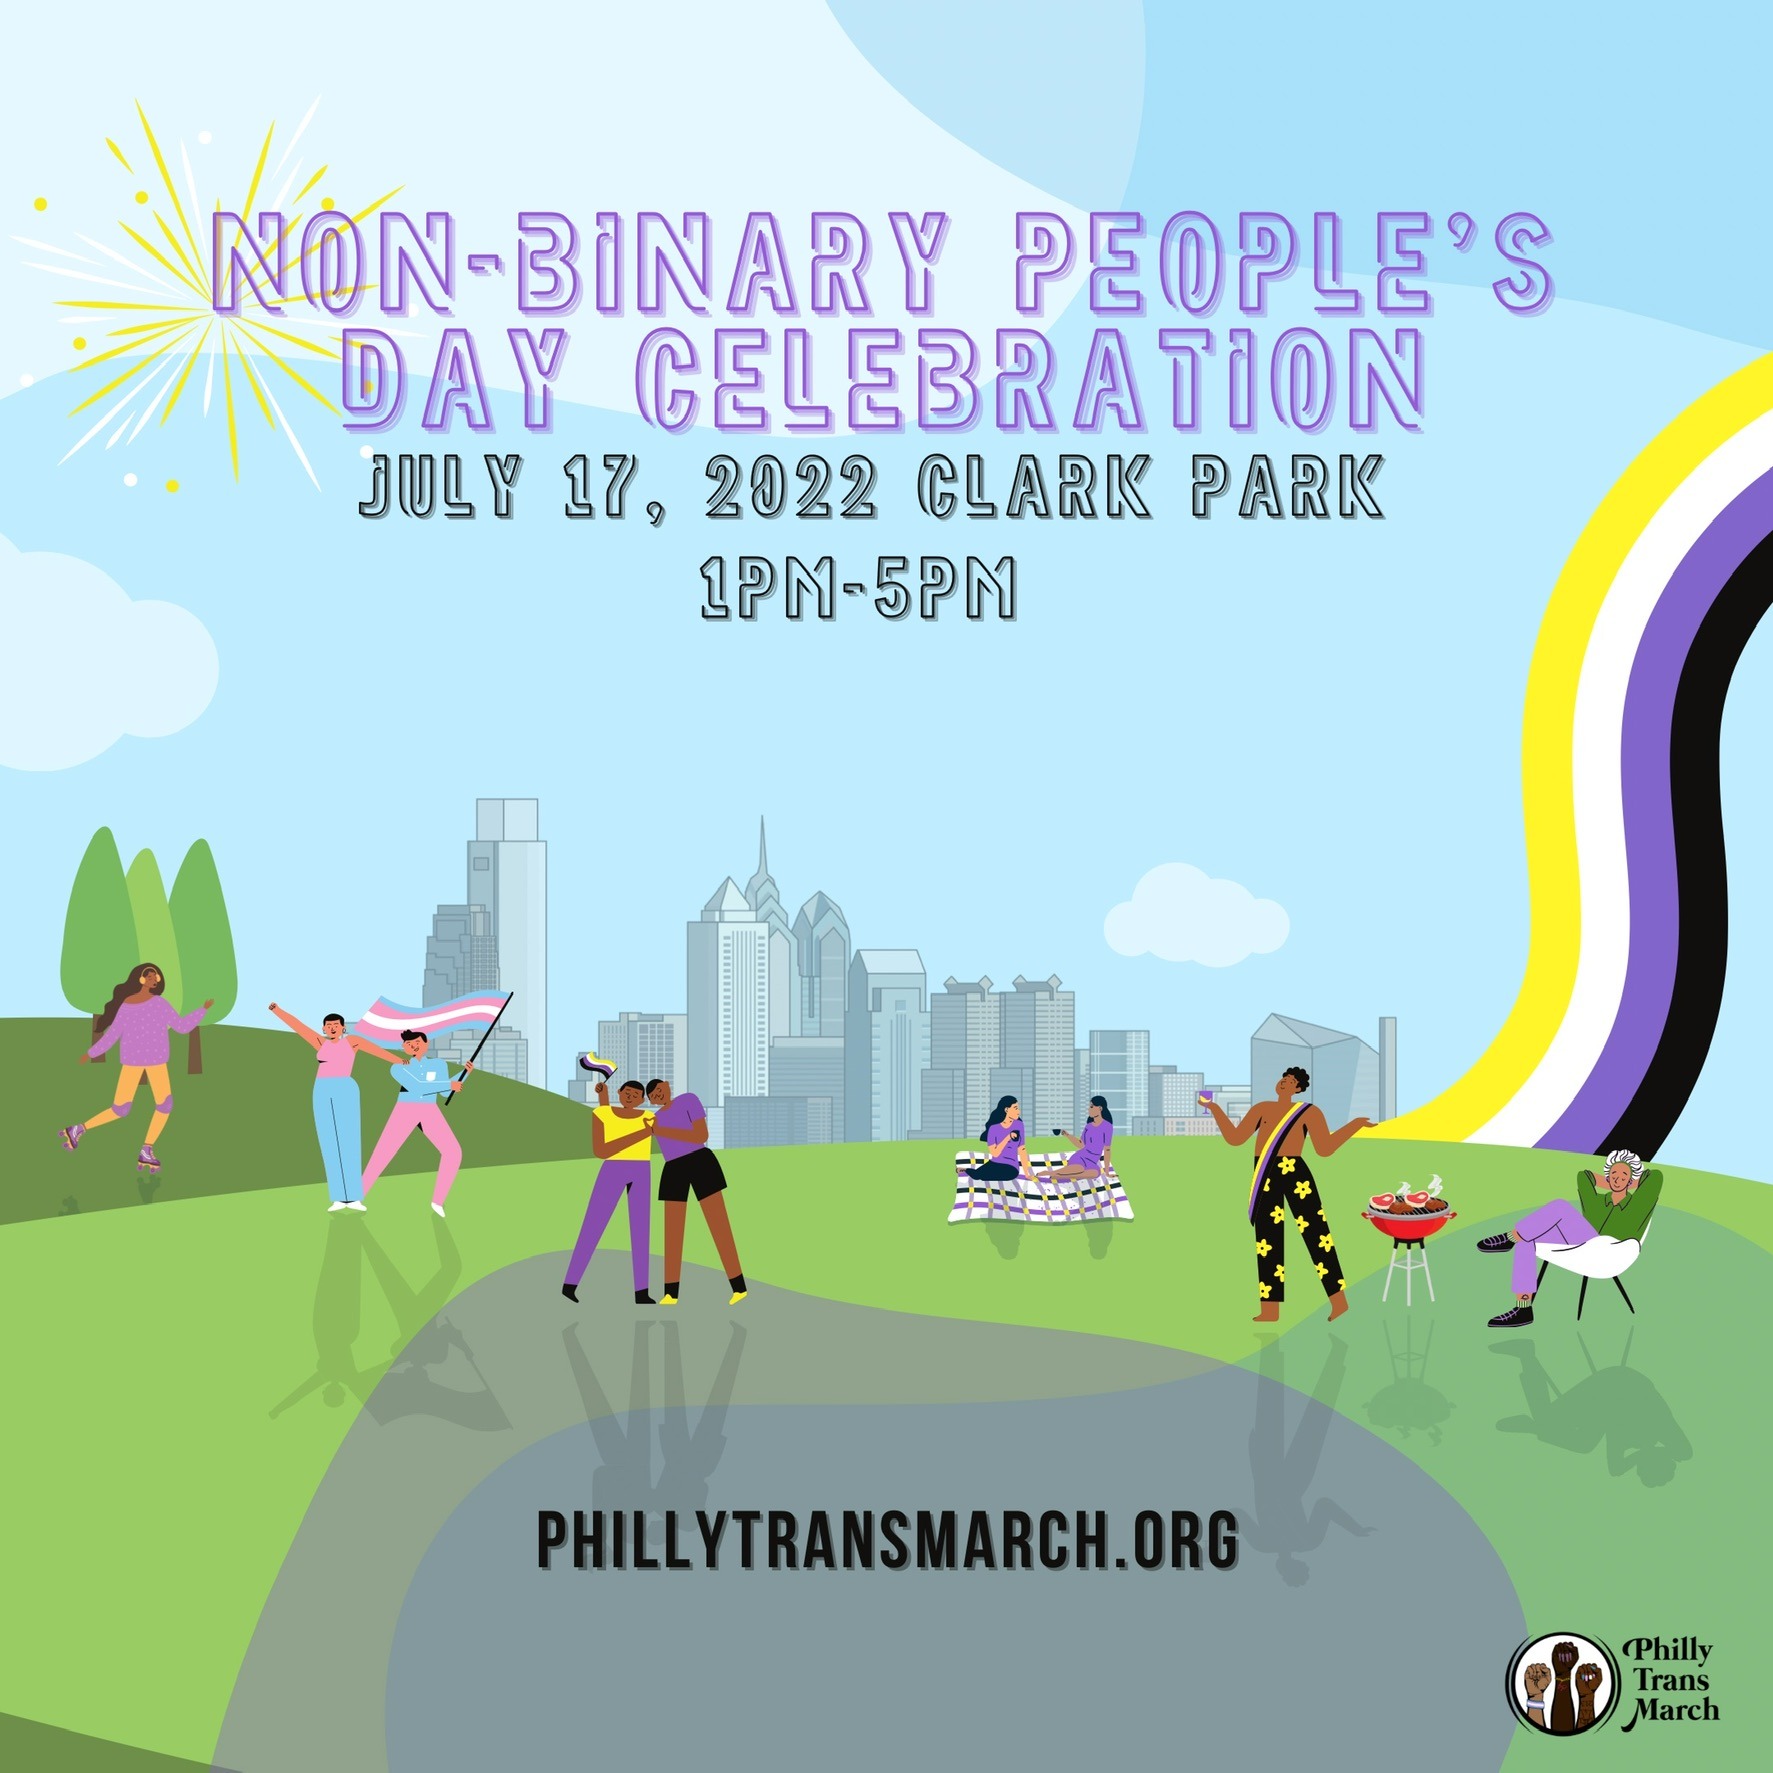 Celebrating International Non-Binary People's Day